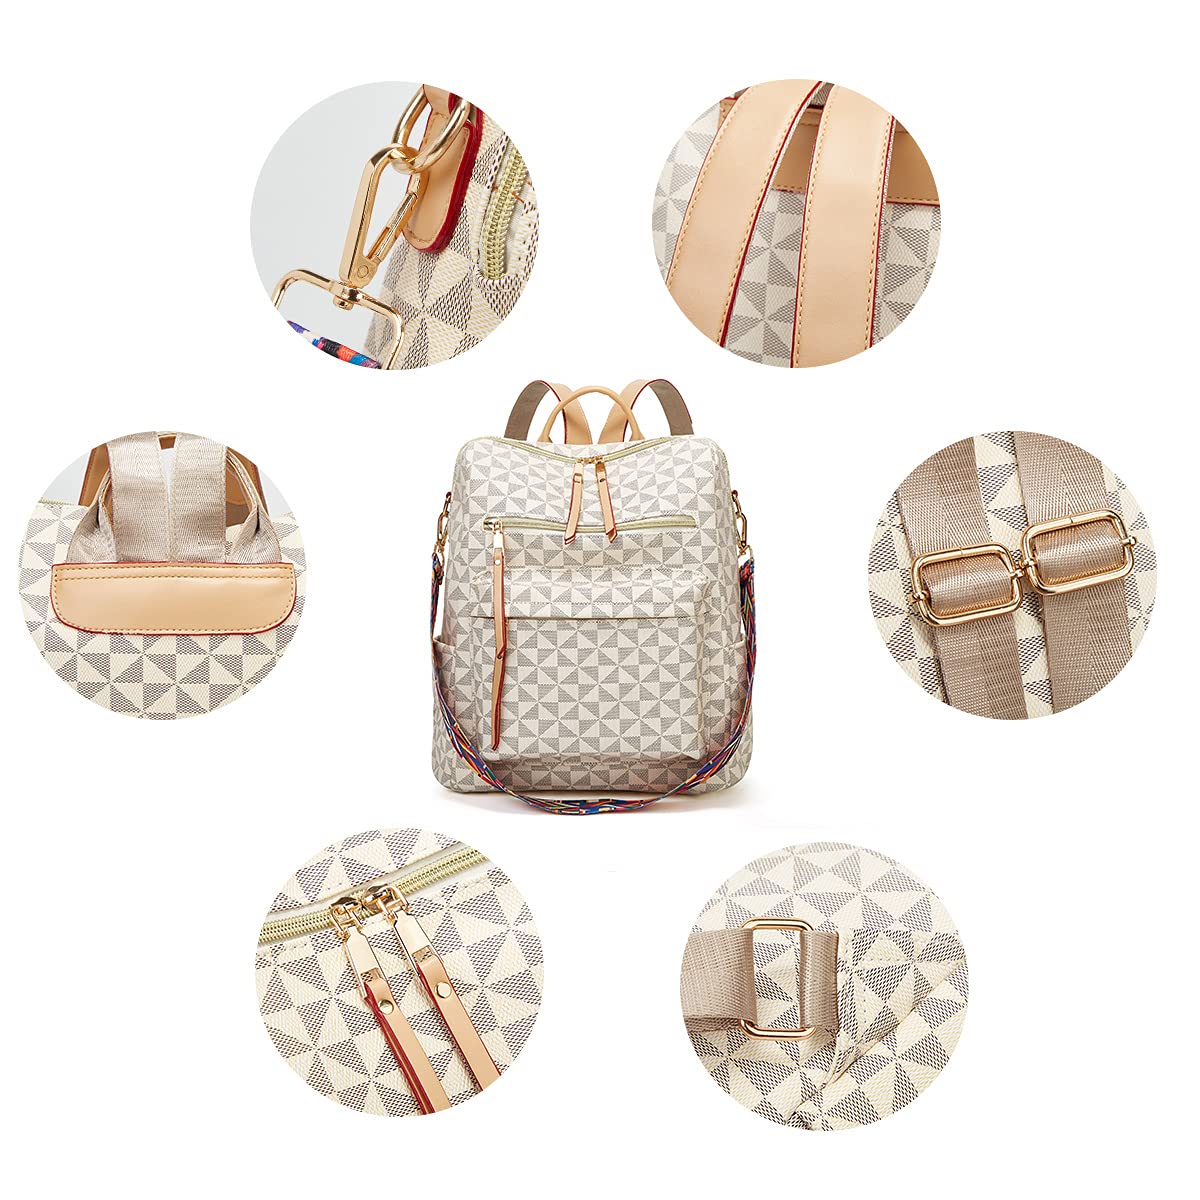 Makes Backpacks for Women Fashion PU Leather Bag Design Convertible Satchel Bag Travel Backpack Handbag and Purse 2Pcs